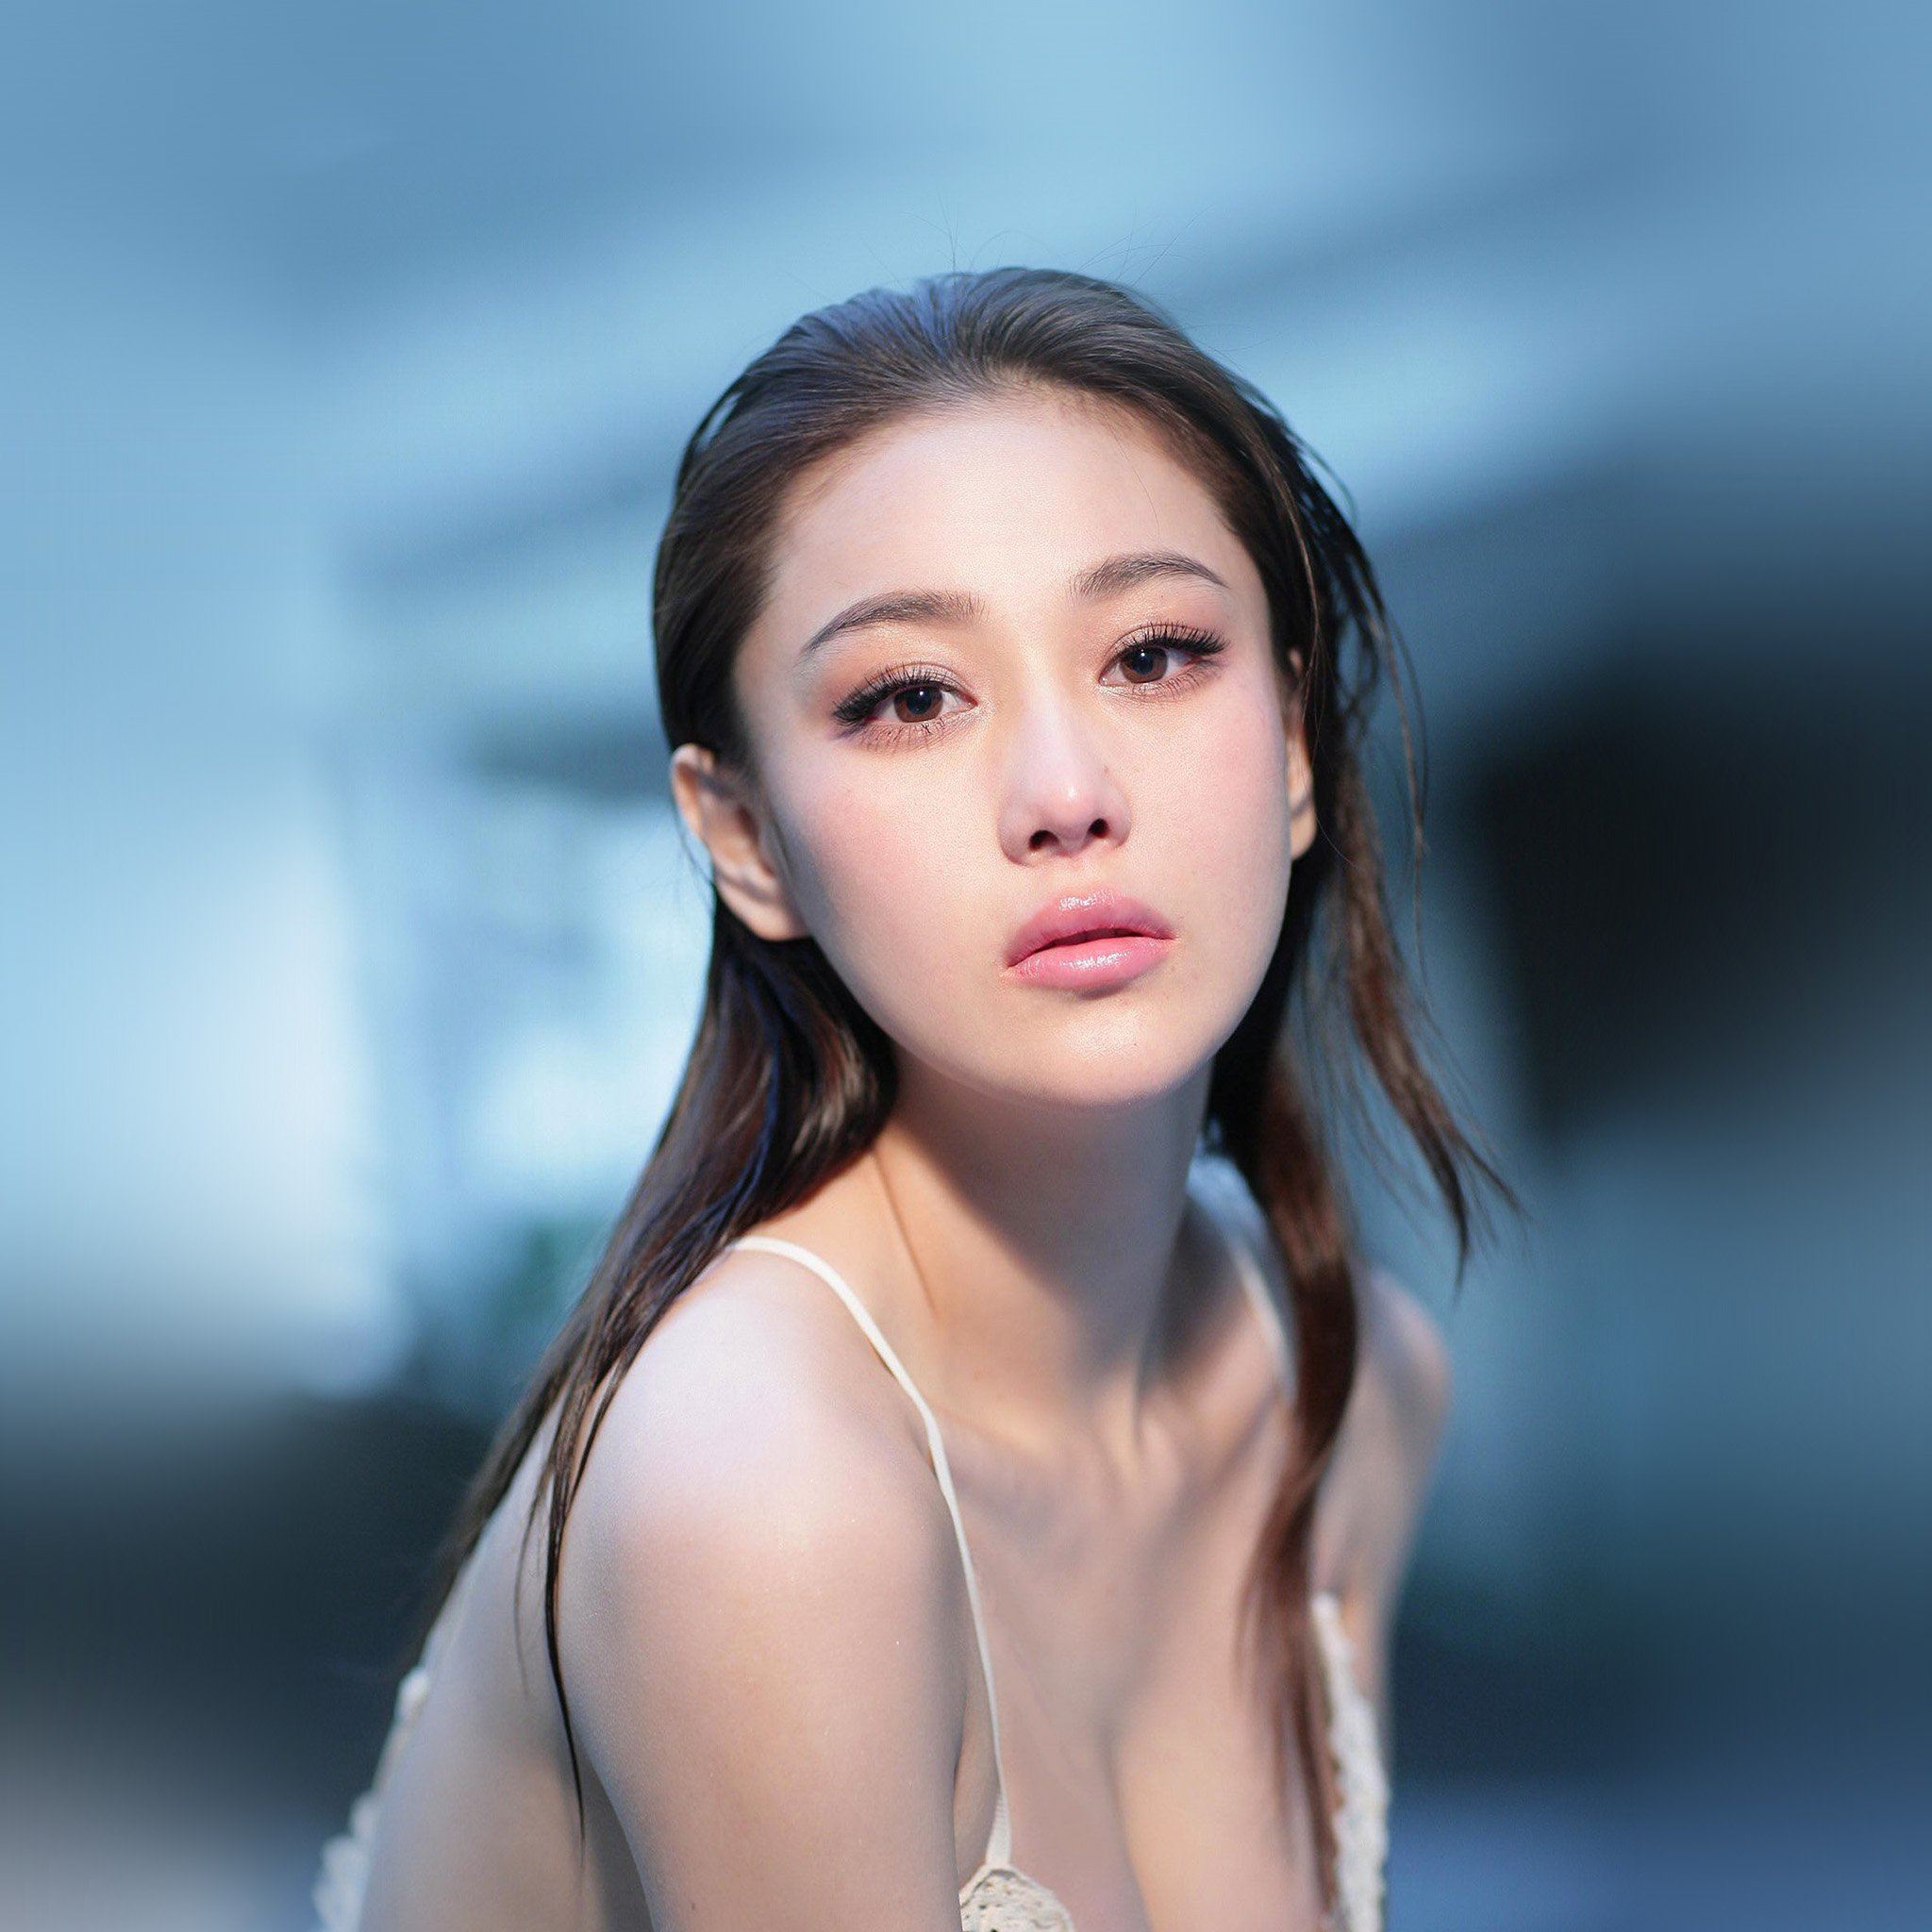 Chinese Girl Hot Model Star iPad Air Wallpaper Free Download